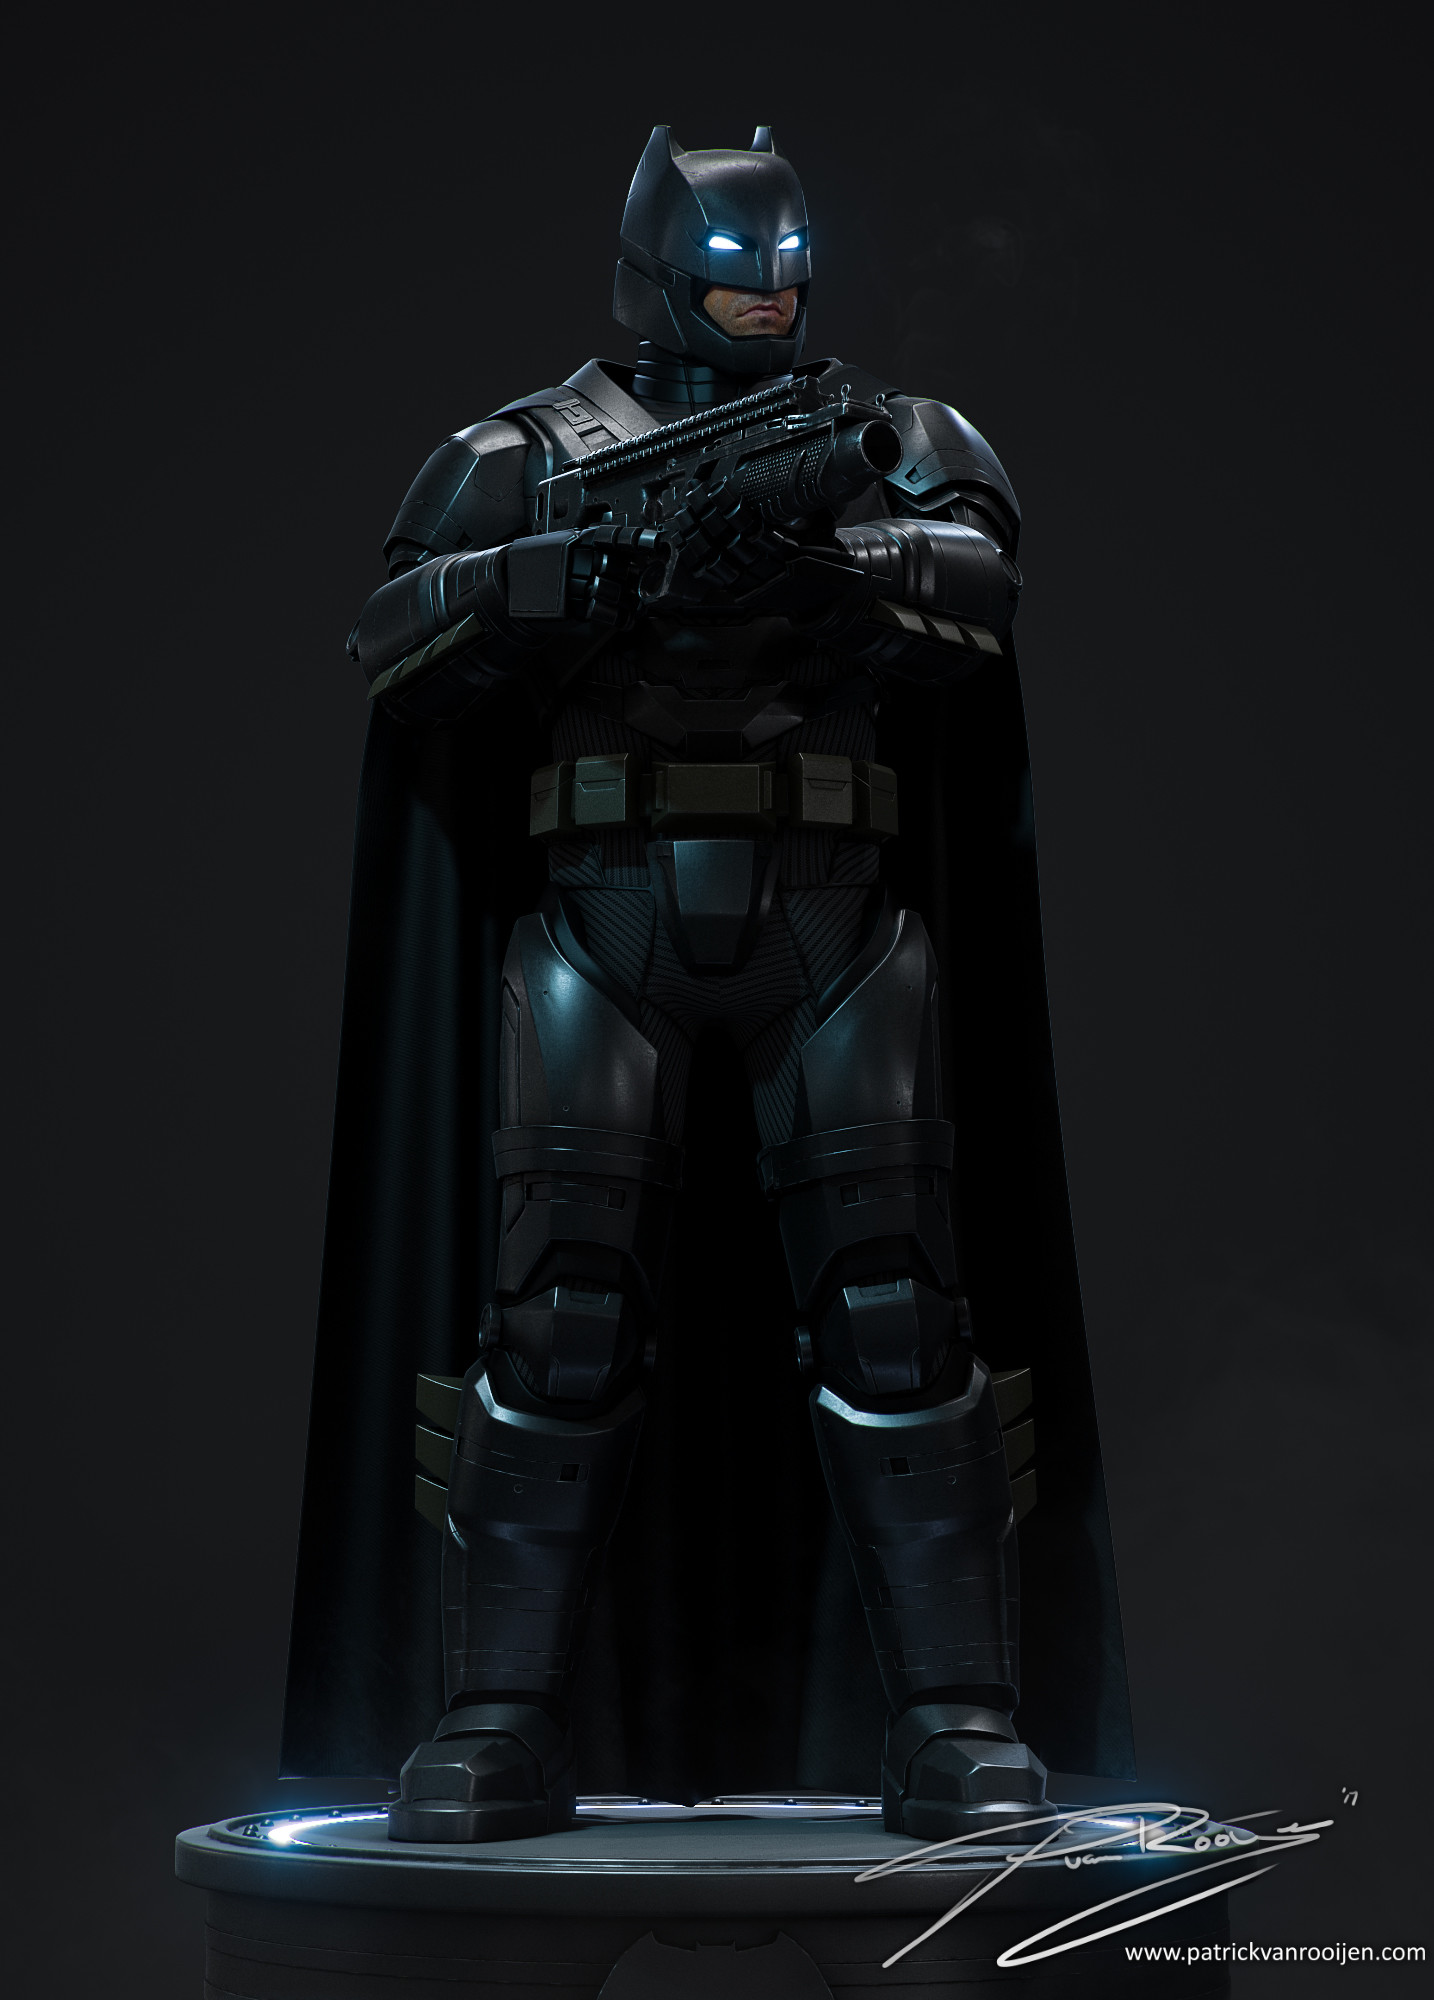 ArtStation - Batman v Superman - Armored Suit